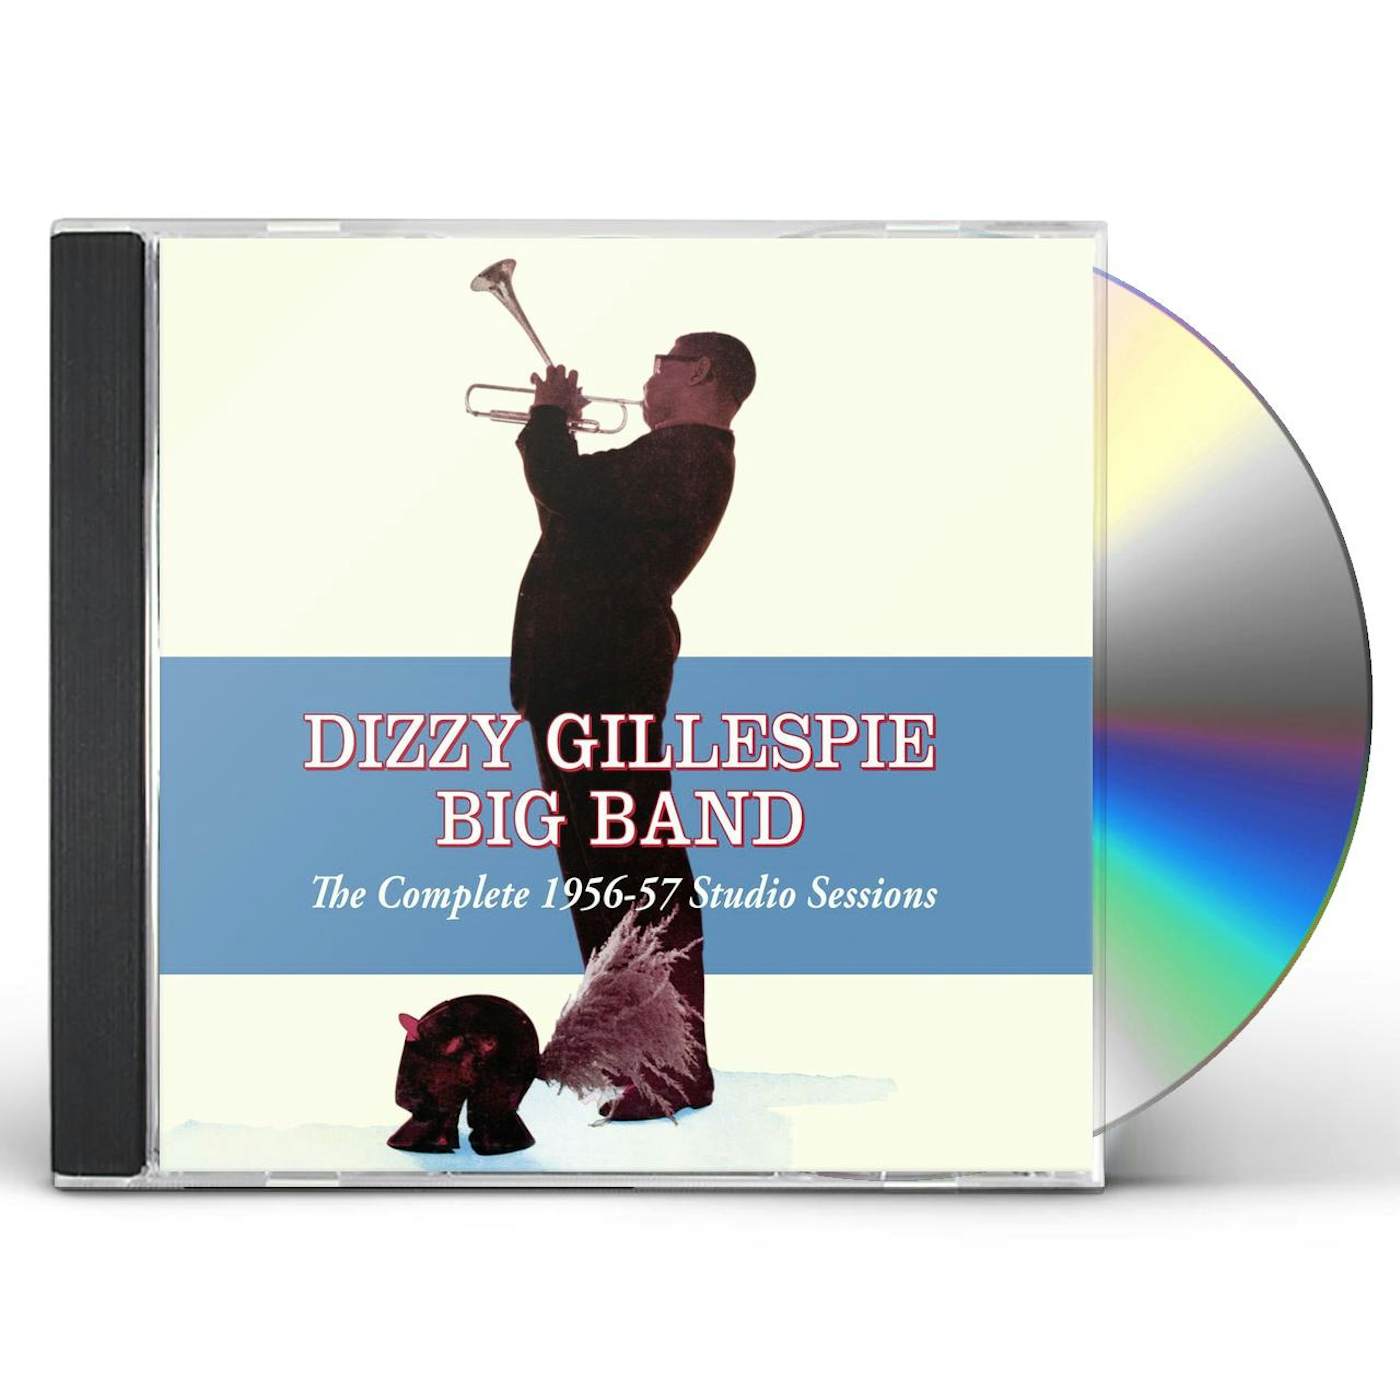 Dizzy Gillespie COMPLETE 1956-57 STUDIO SESSIONS CD